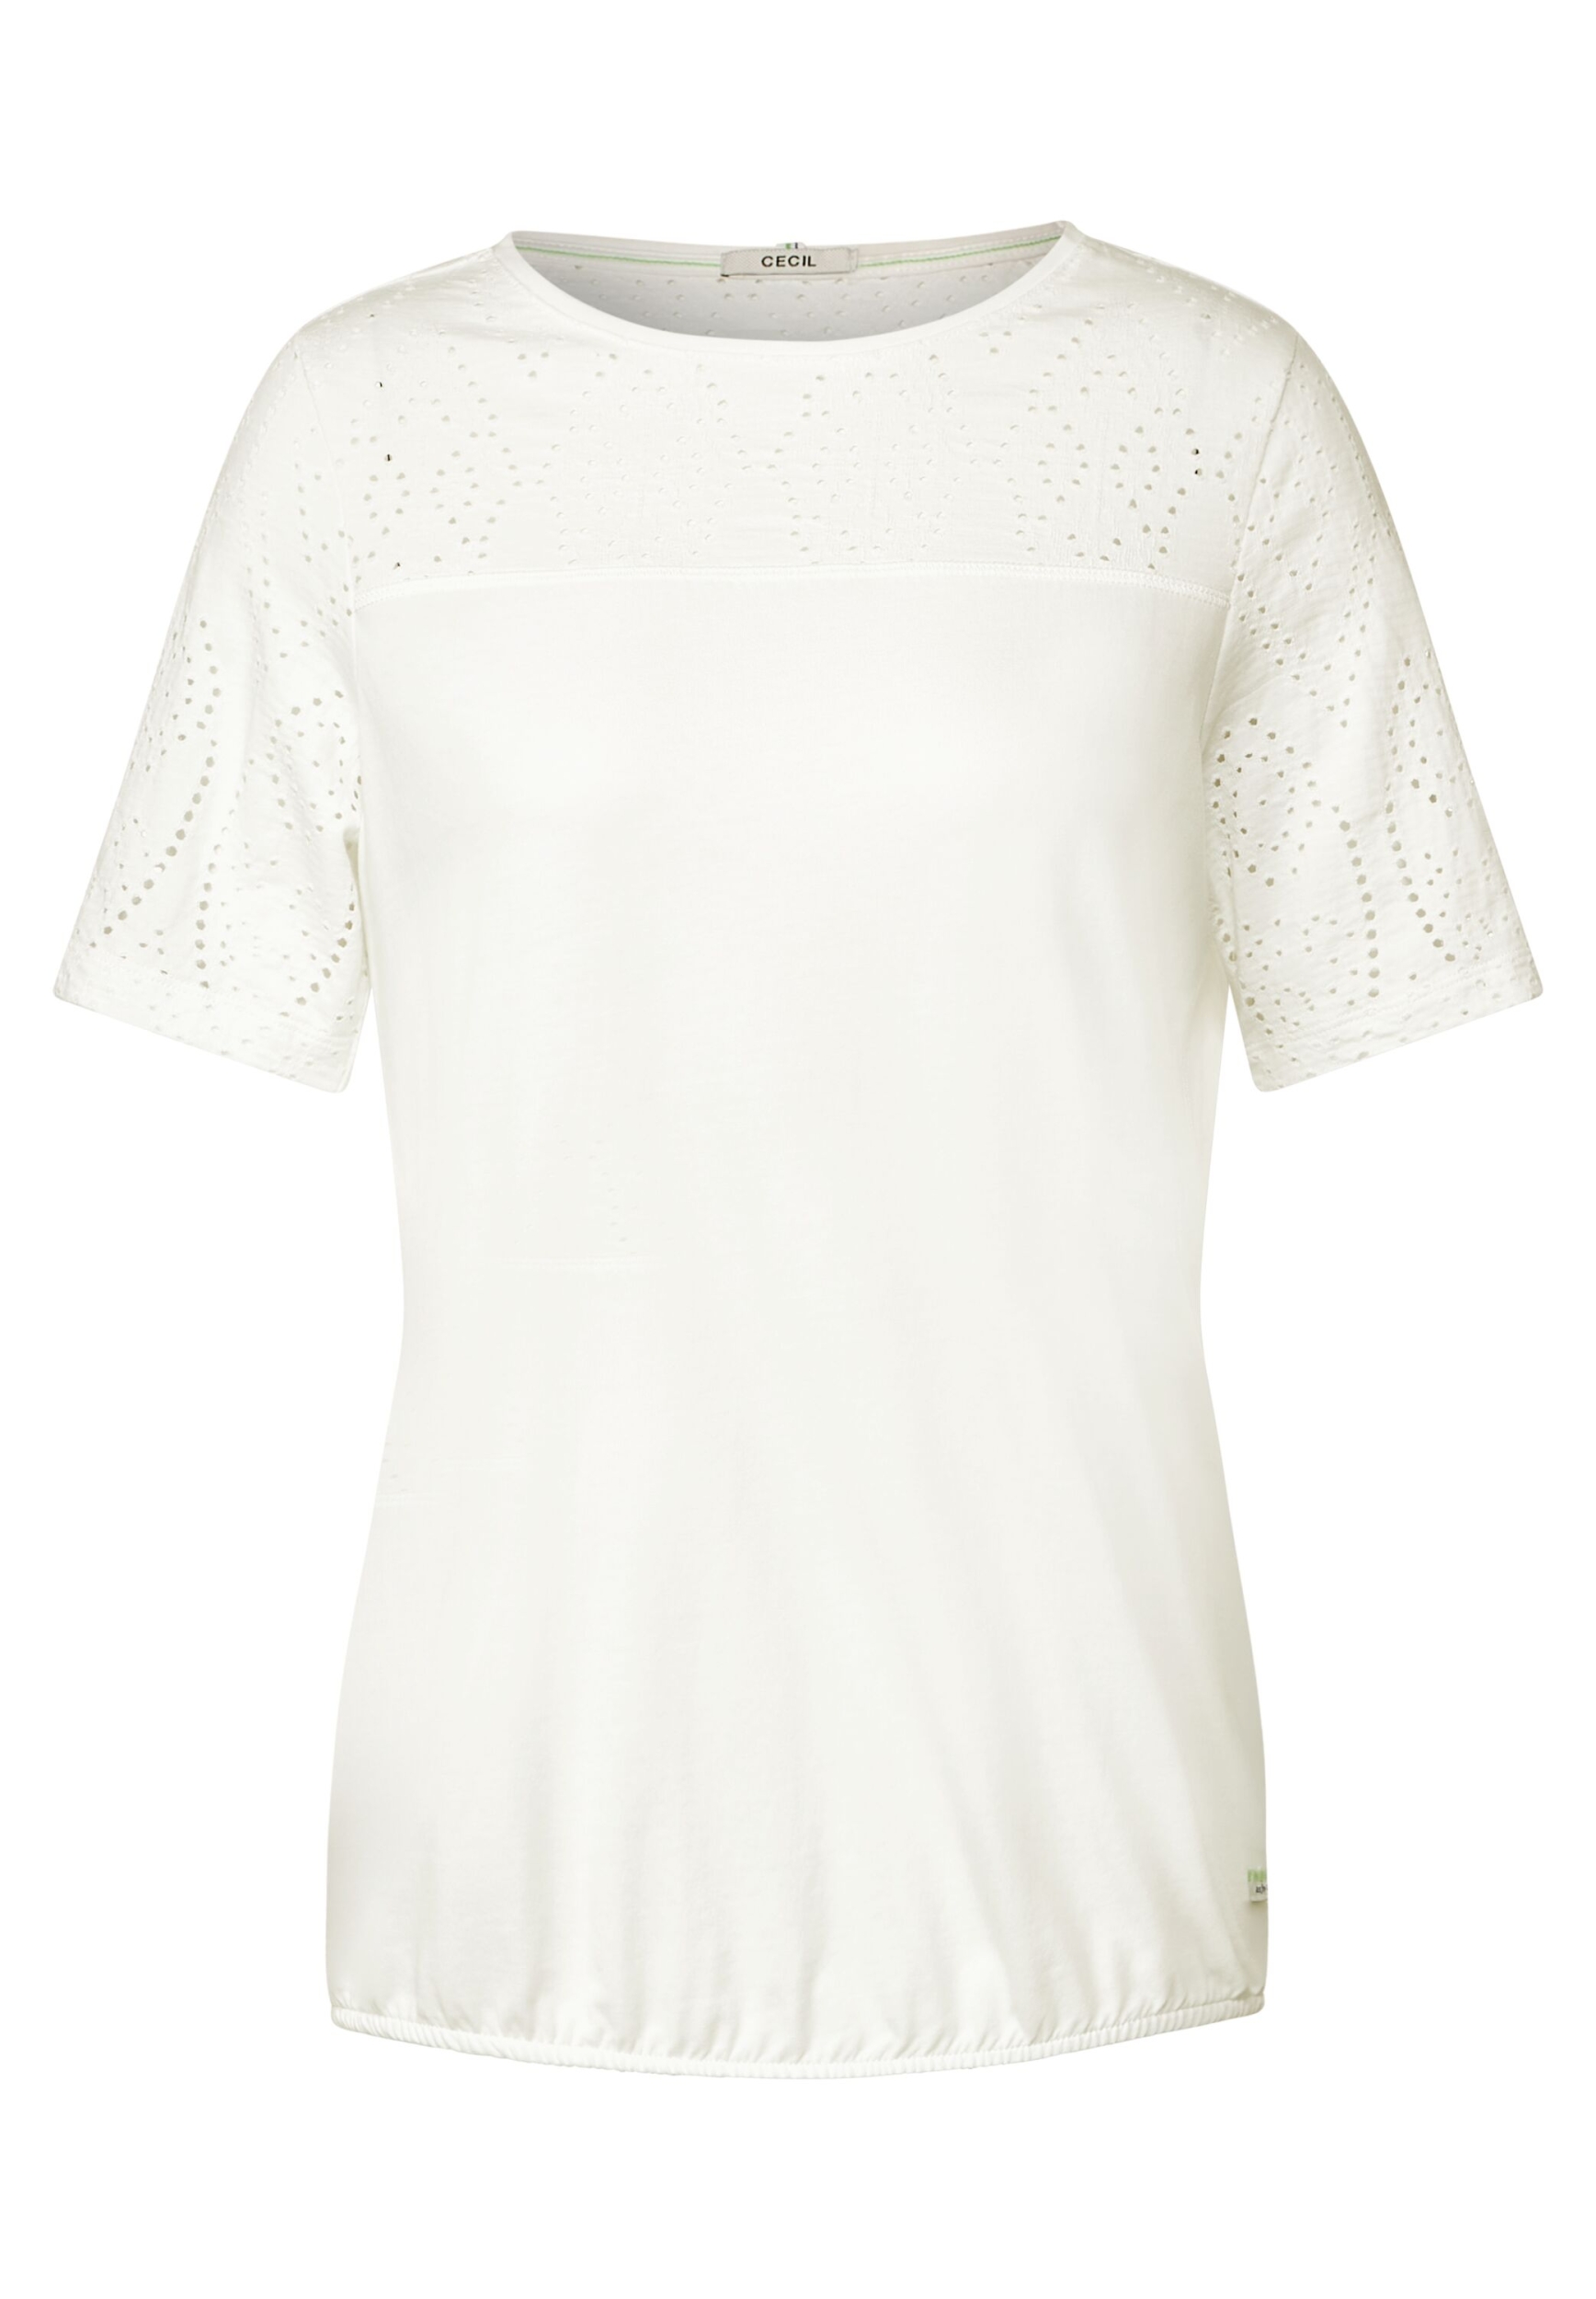 Hotfix Shirt | L | FP B320233-33474-L white vanilla |